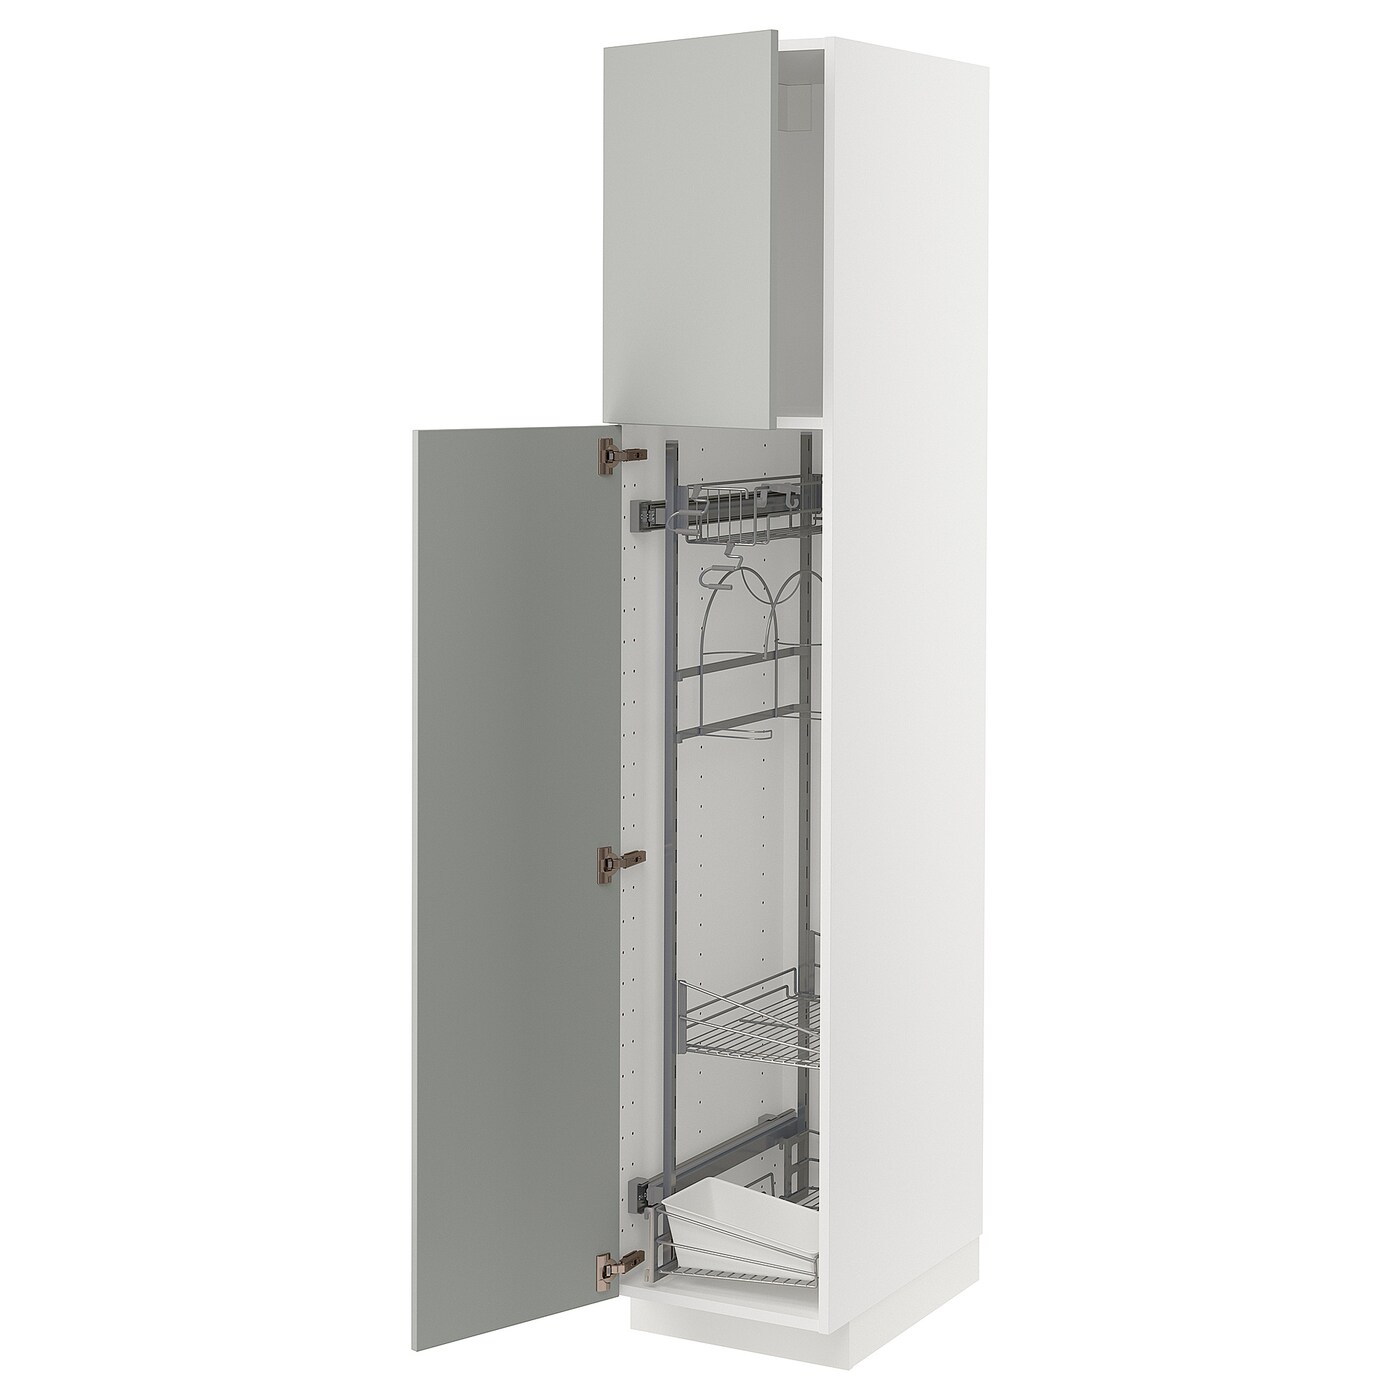 Высокий кухонный шкаф/бытовой - IKEA METOD/МЕТОД ИКЕА, 200х60х40 см, белый/серый